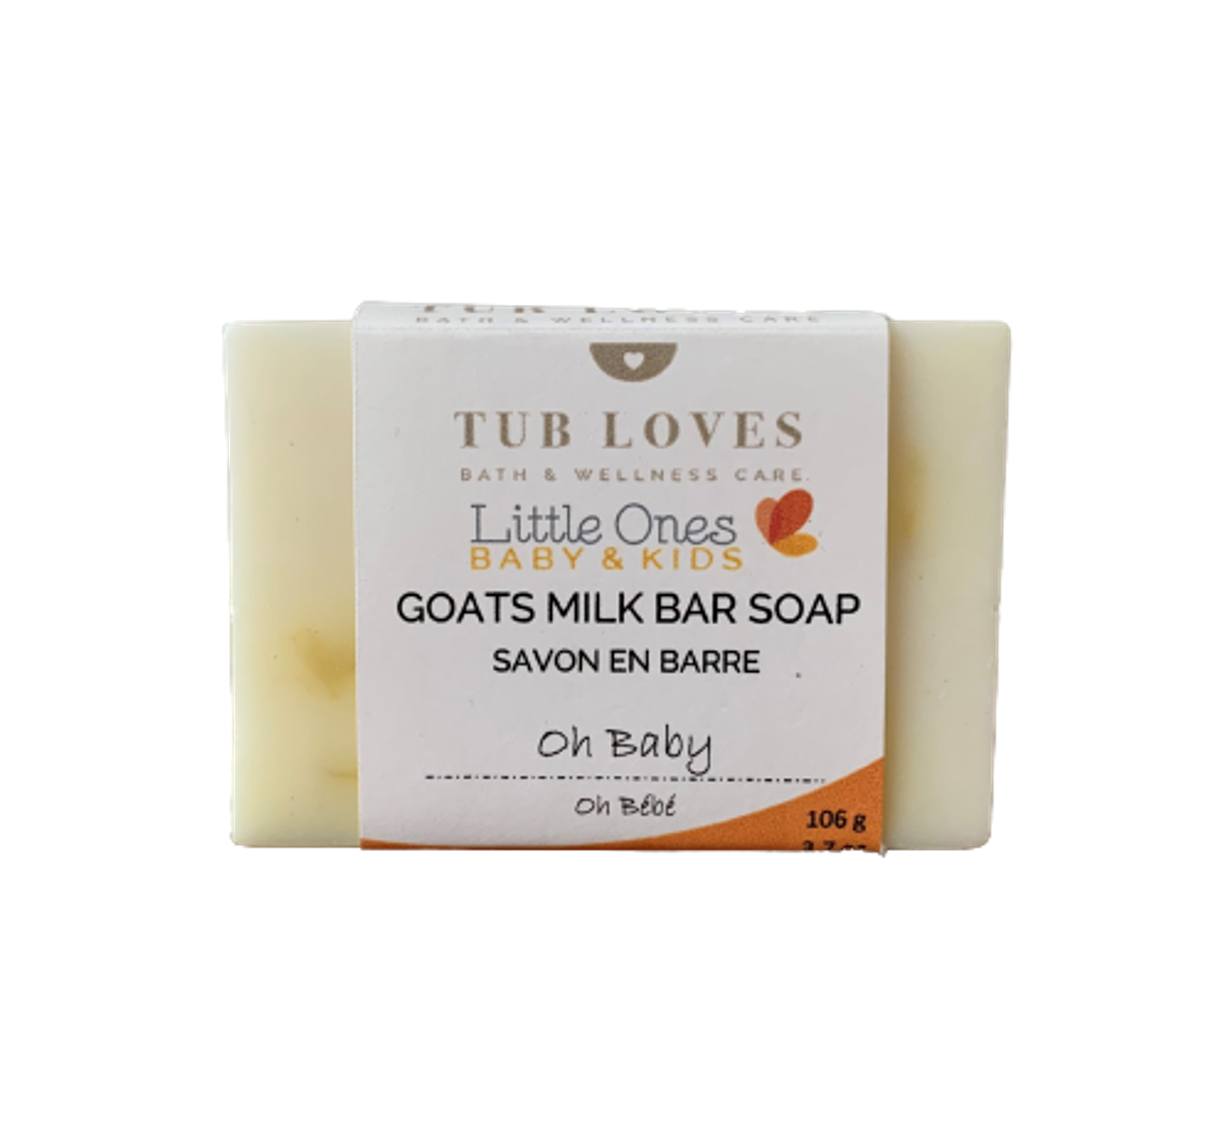 OH Baby - Goats Milk Soap Bar - Tub Loves